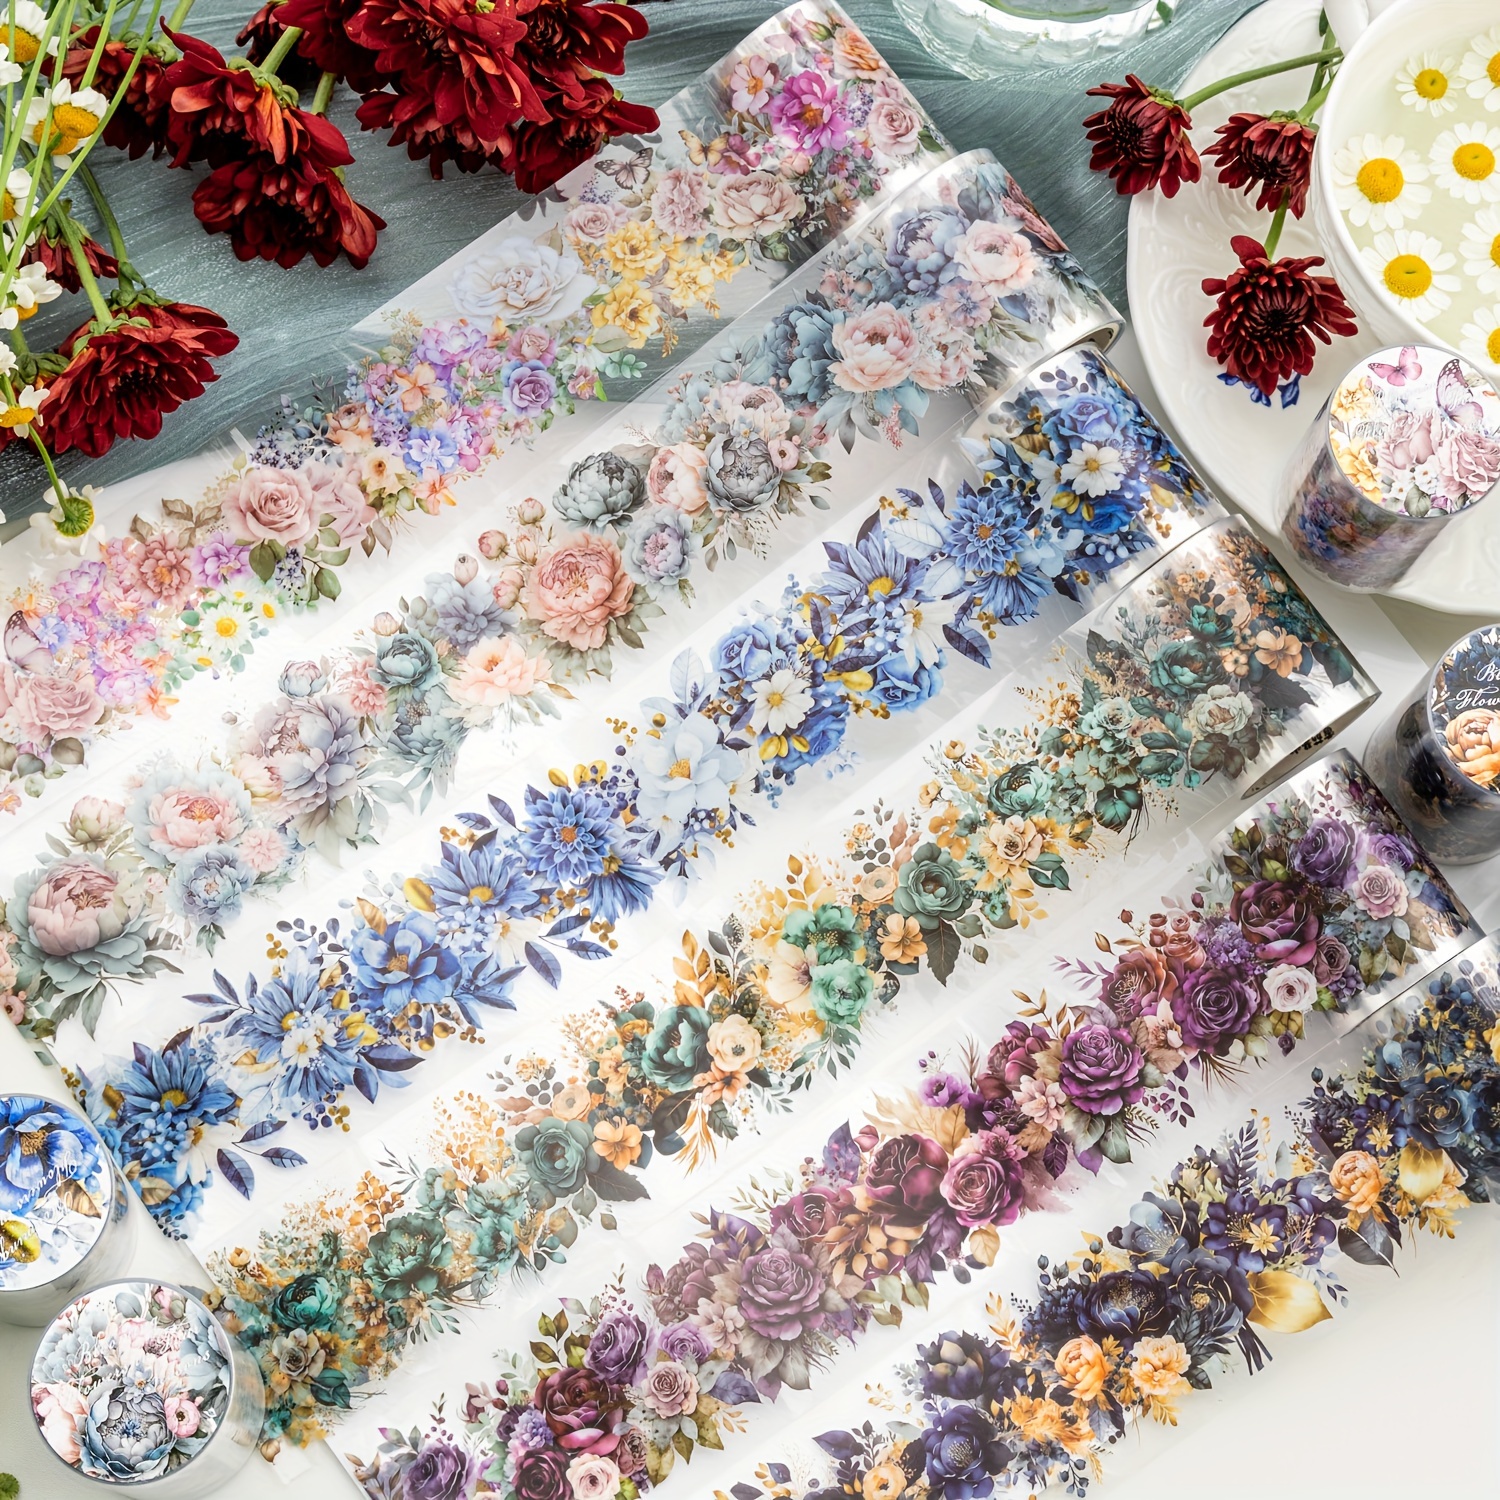 

Vintage Floral Washi Tape, 1 Roll - Decorative Adhesive For Scrapbooking, Diy Crafts & Journaling